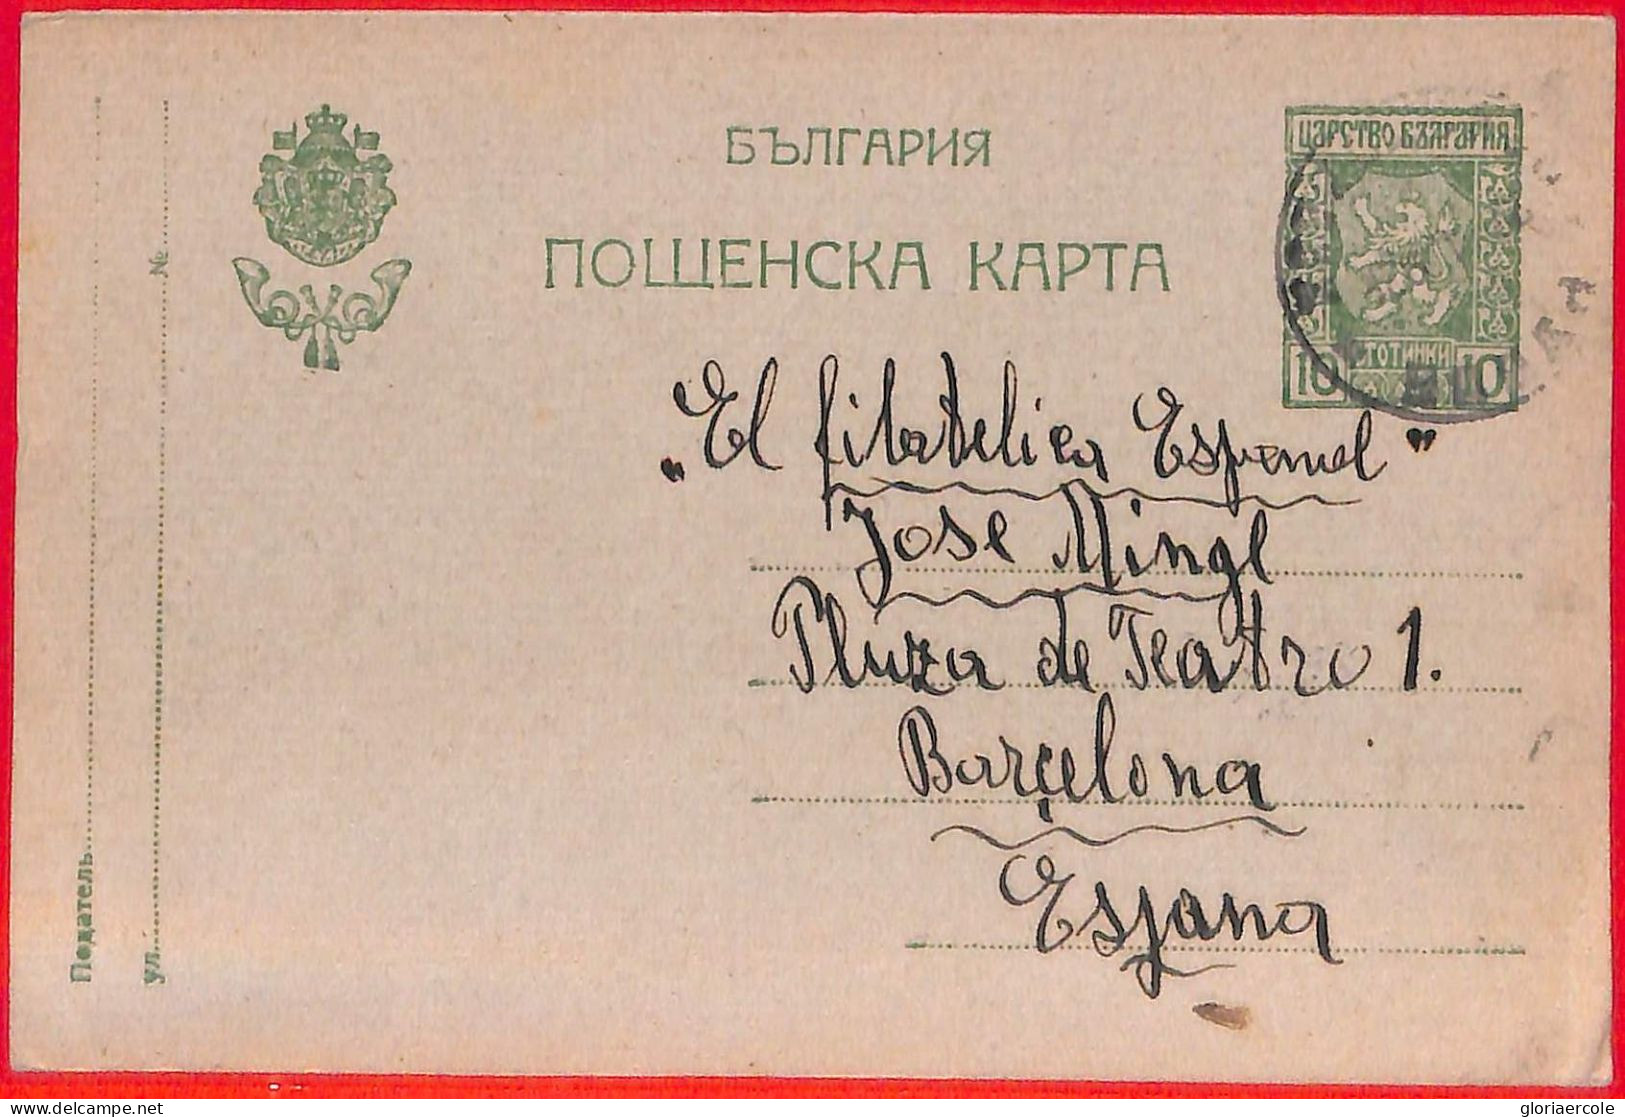 Aa0511 - BULGARIA - Postal History - STATIONERY CARD From ROUSTOUCK To SPAIN 1920's - Cartoline Postali